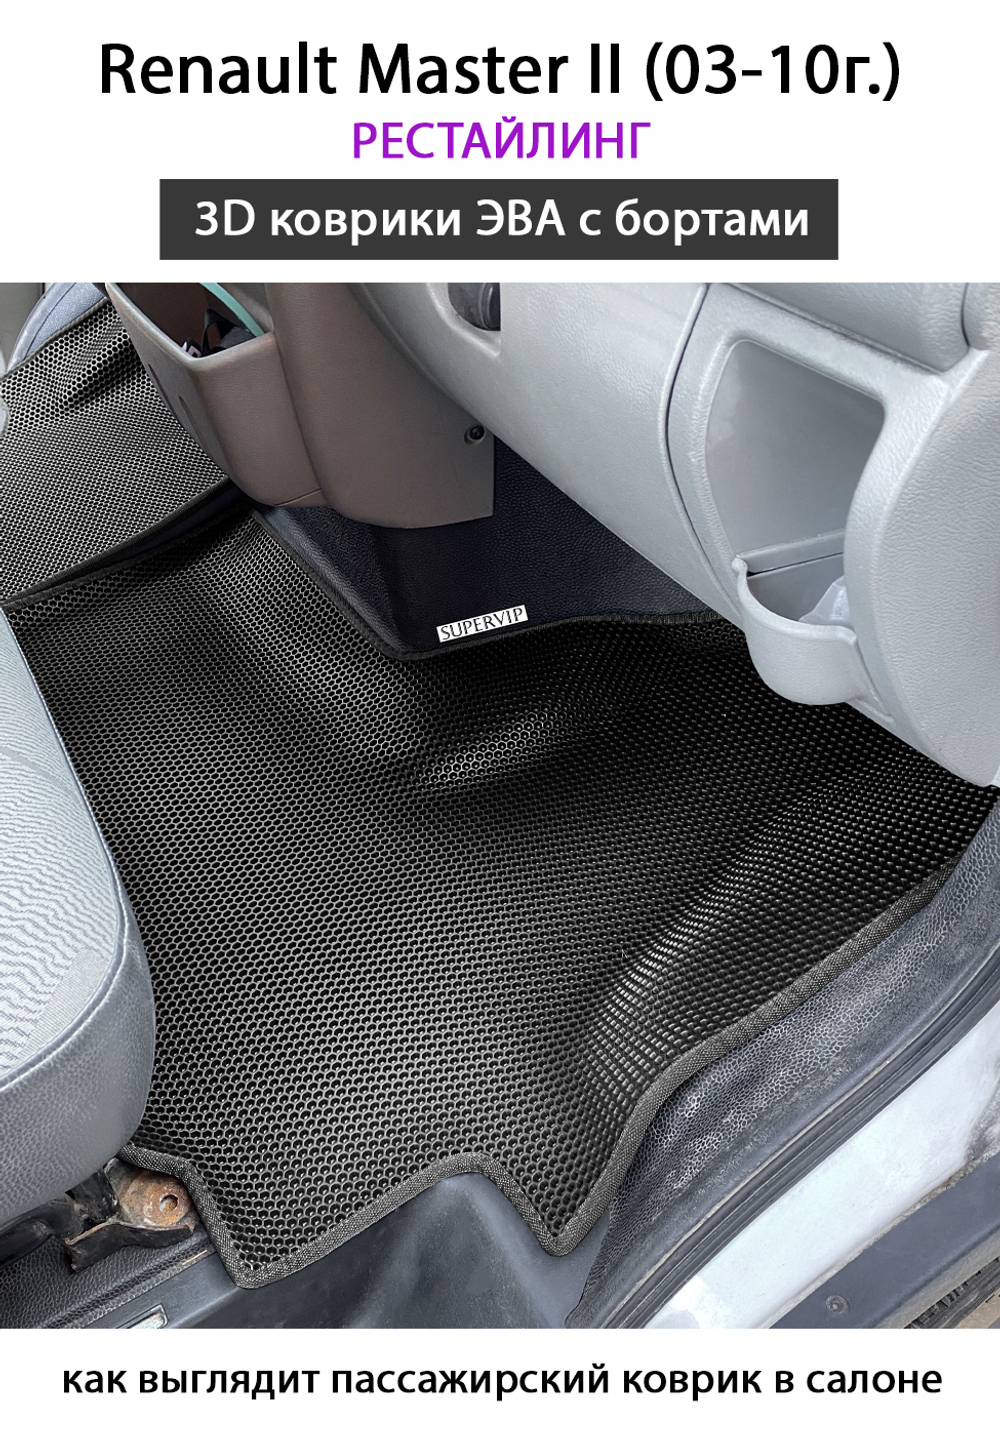 передние эва коврики в салон авто для renault master II (03-10г.) от supervip